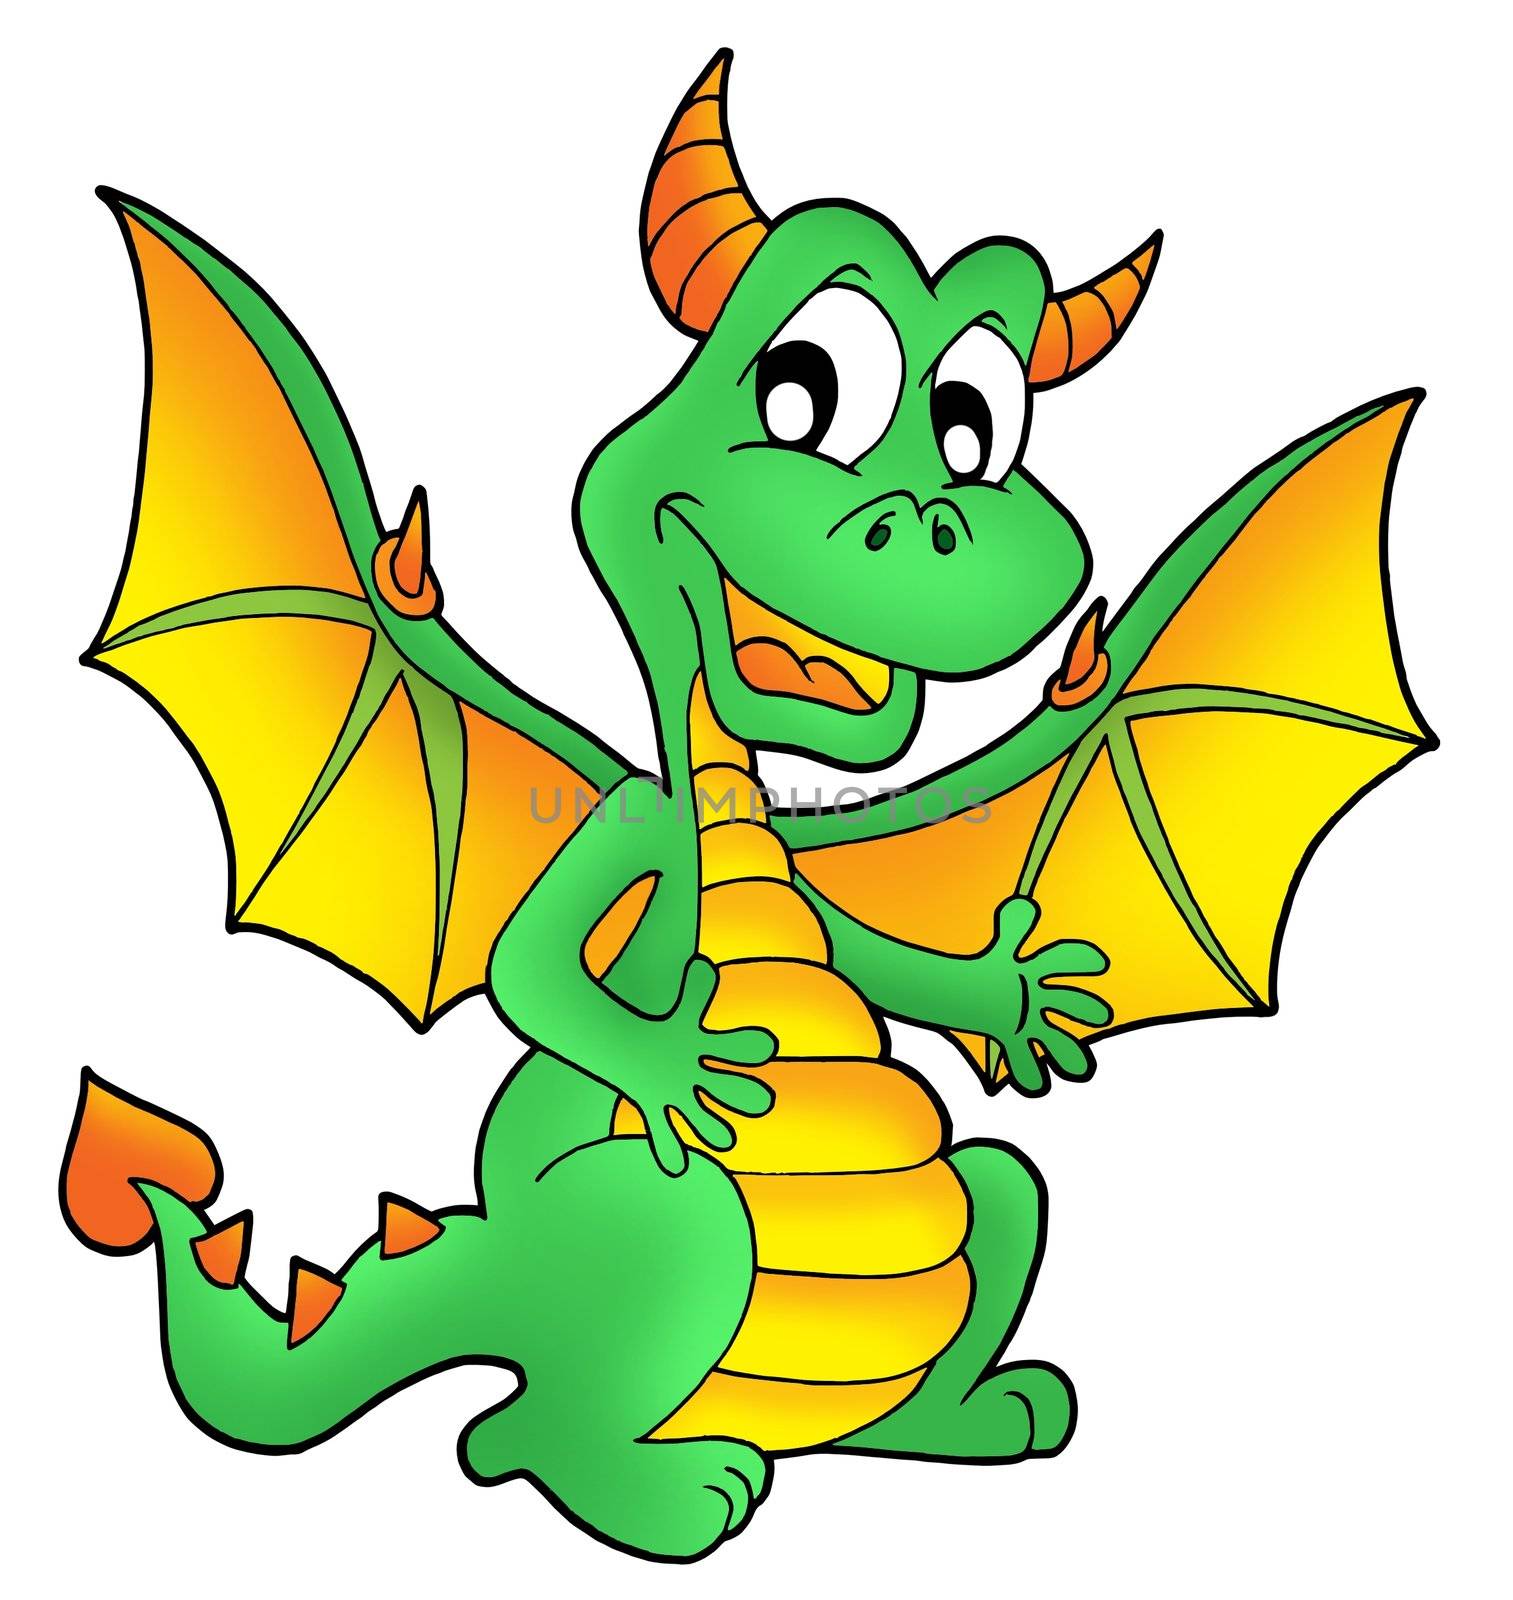 Cute green dragon - color illustration.